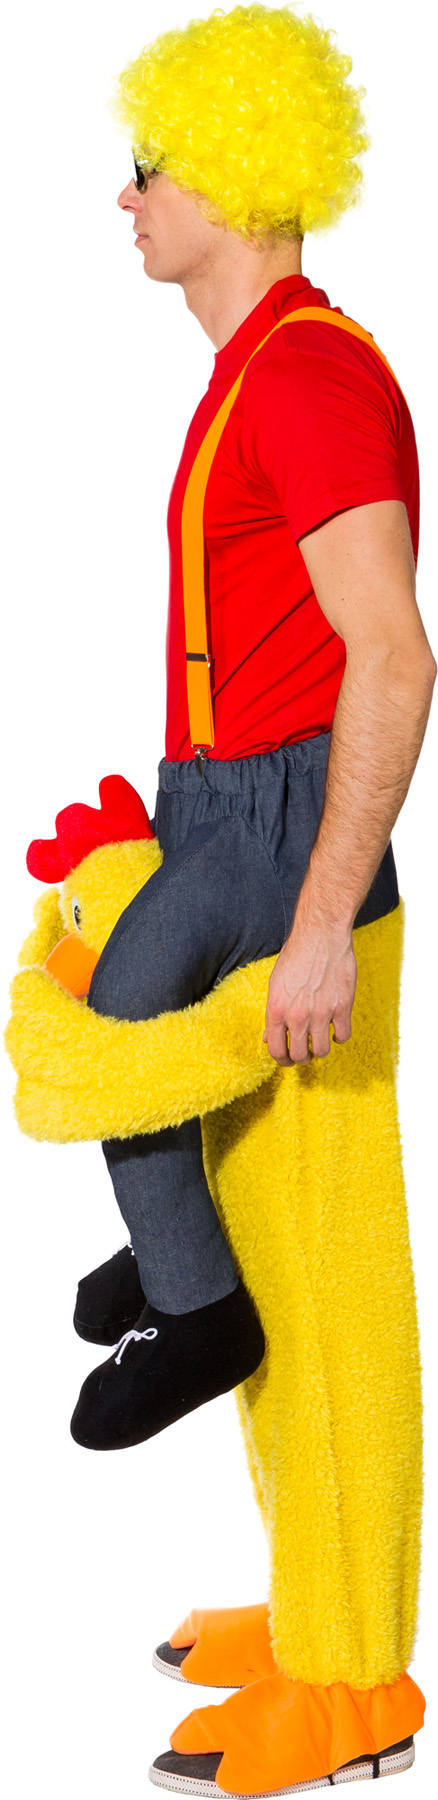 Costume poulet ferroutage